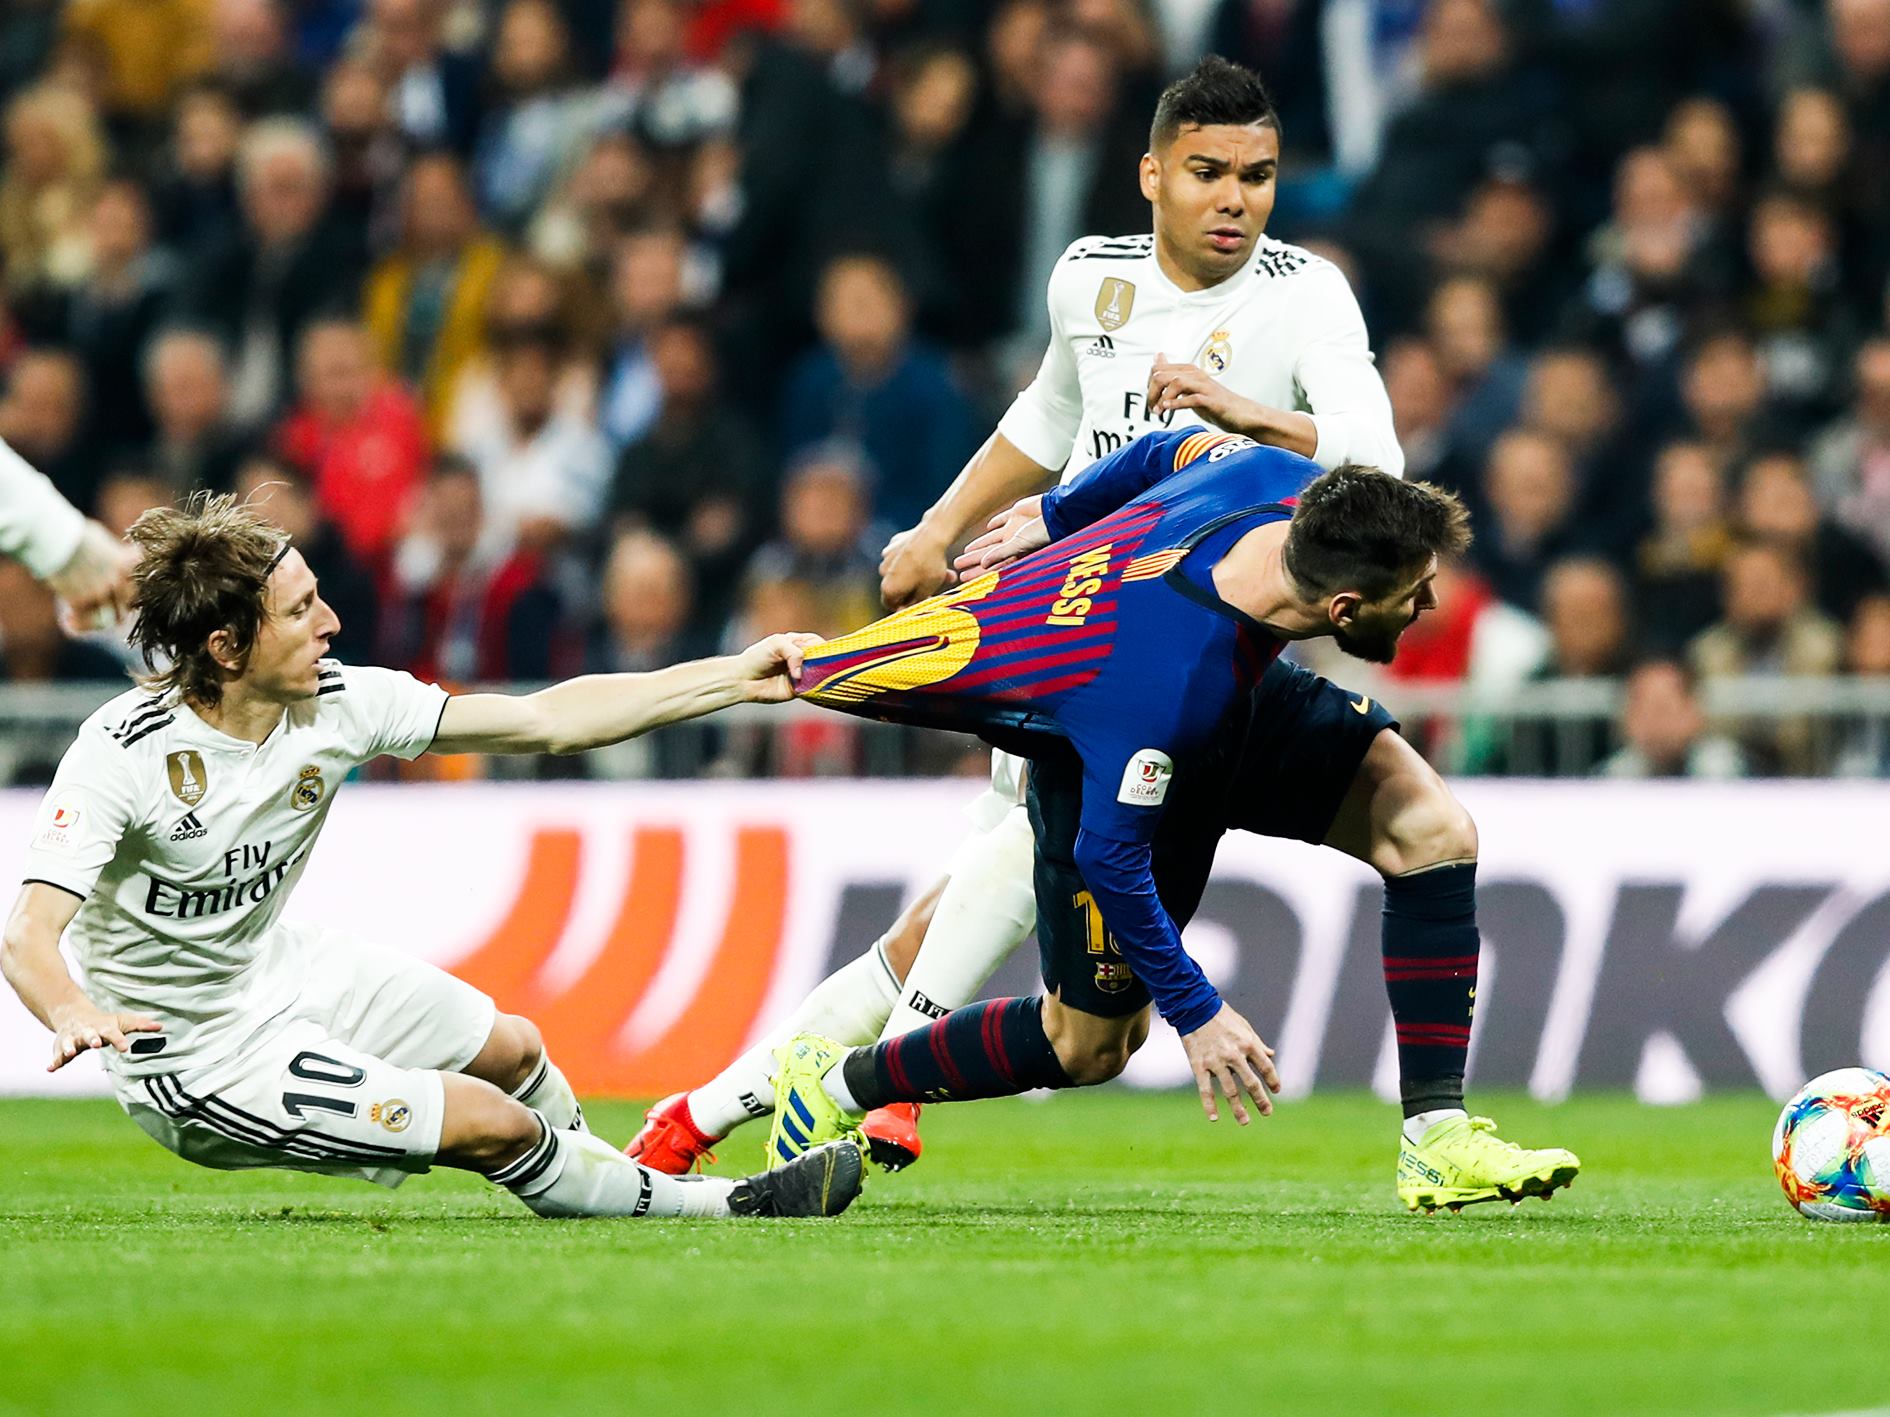 Real 0-3 Barca, Real thua Barca, Ramos dọa xử Bale, Ramos dọa giết Bale, Ramos, Real, siêu kinh điển